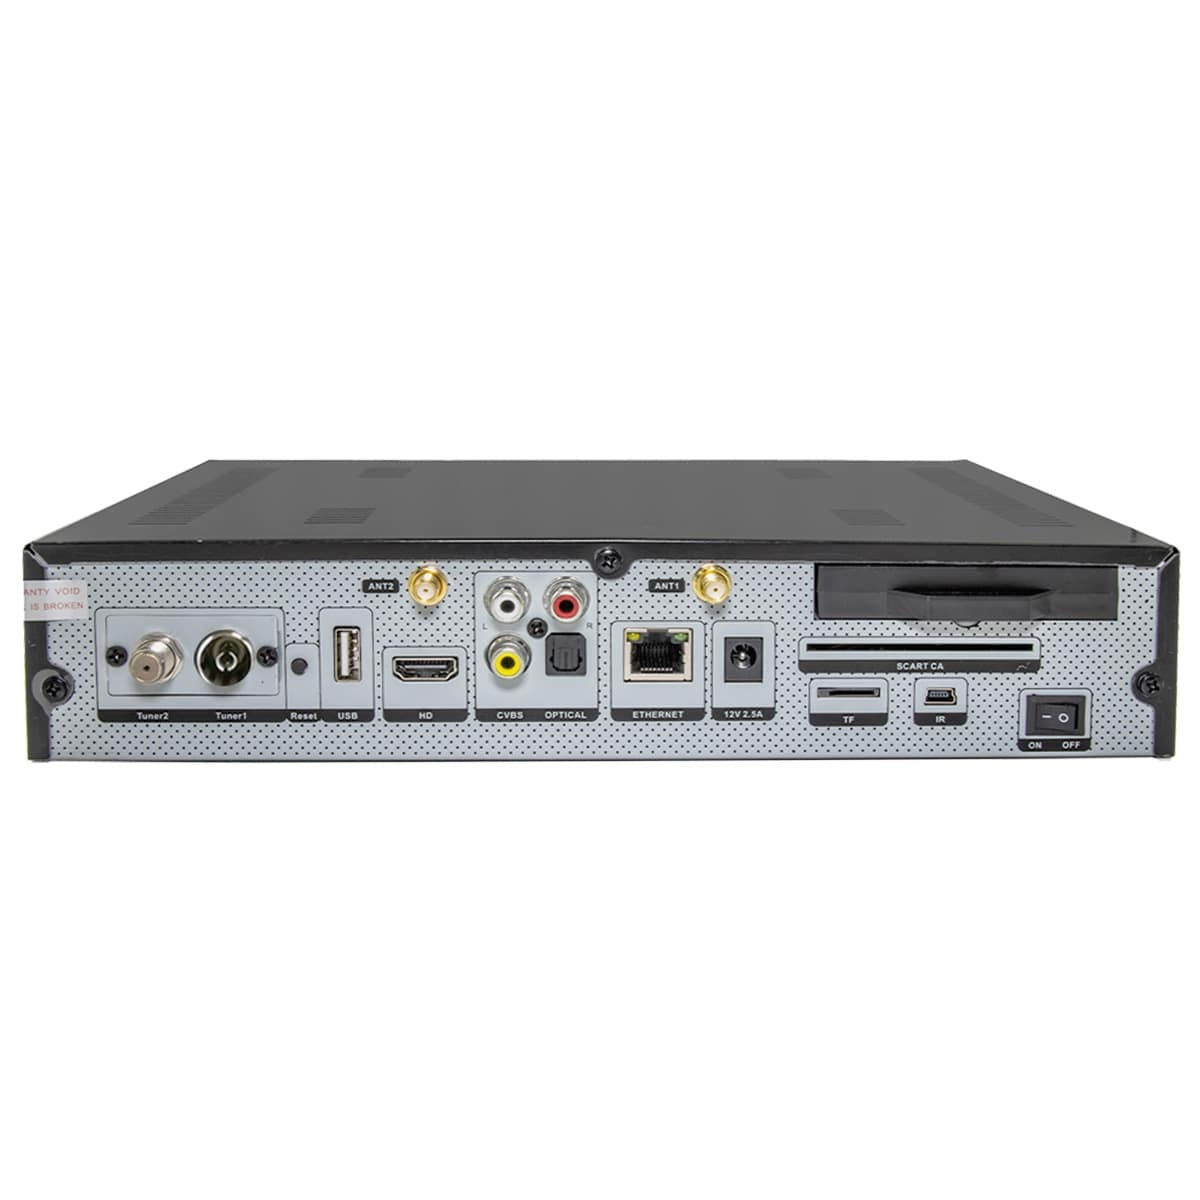 MUT@NT HD66 SE Combo-Receiver Sat-Receiver Twin DVB-S2, (PVR-Funktion=optional, Tuner, Schwarz) DVB-C2, DVB-T2 (H.265), DVB-C